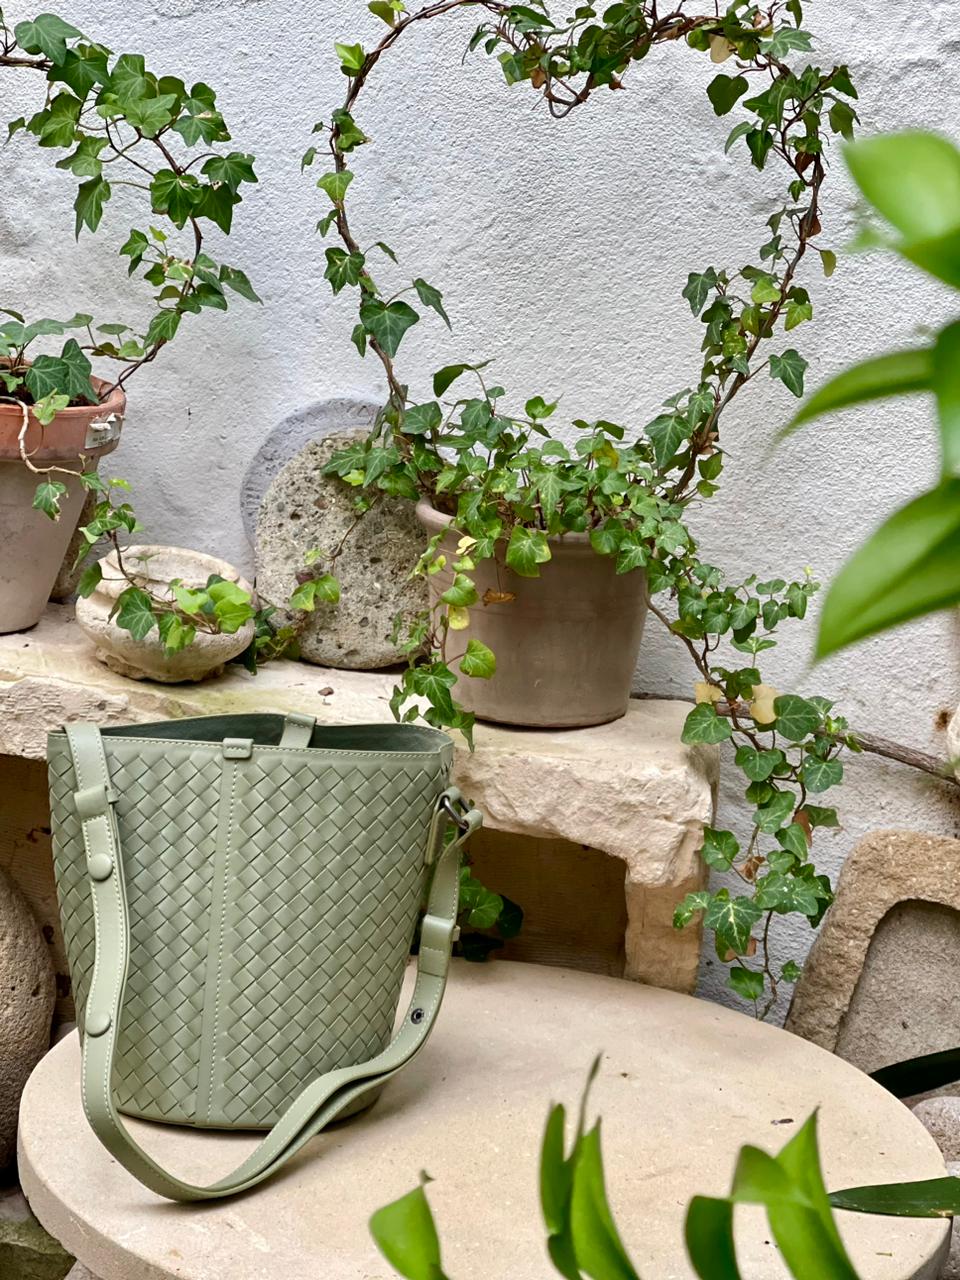 Mini weave bucket Bag Green